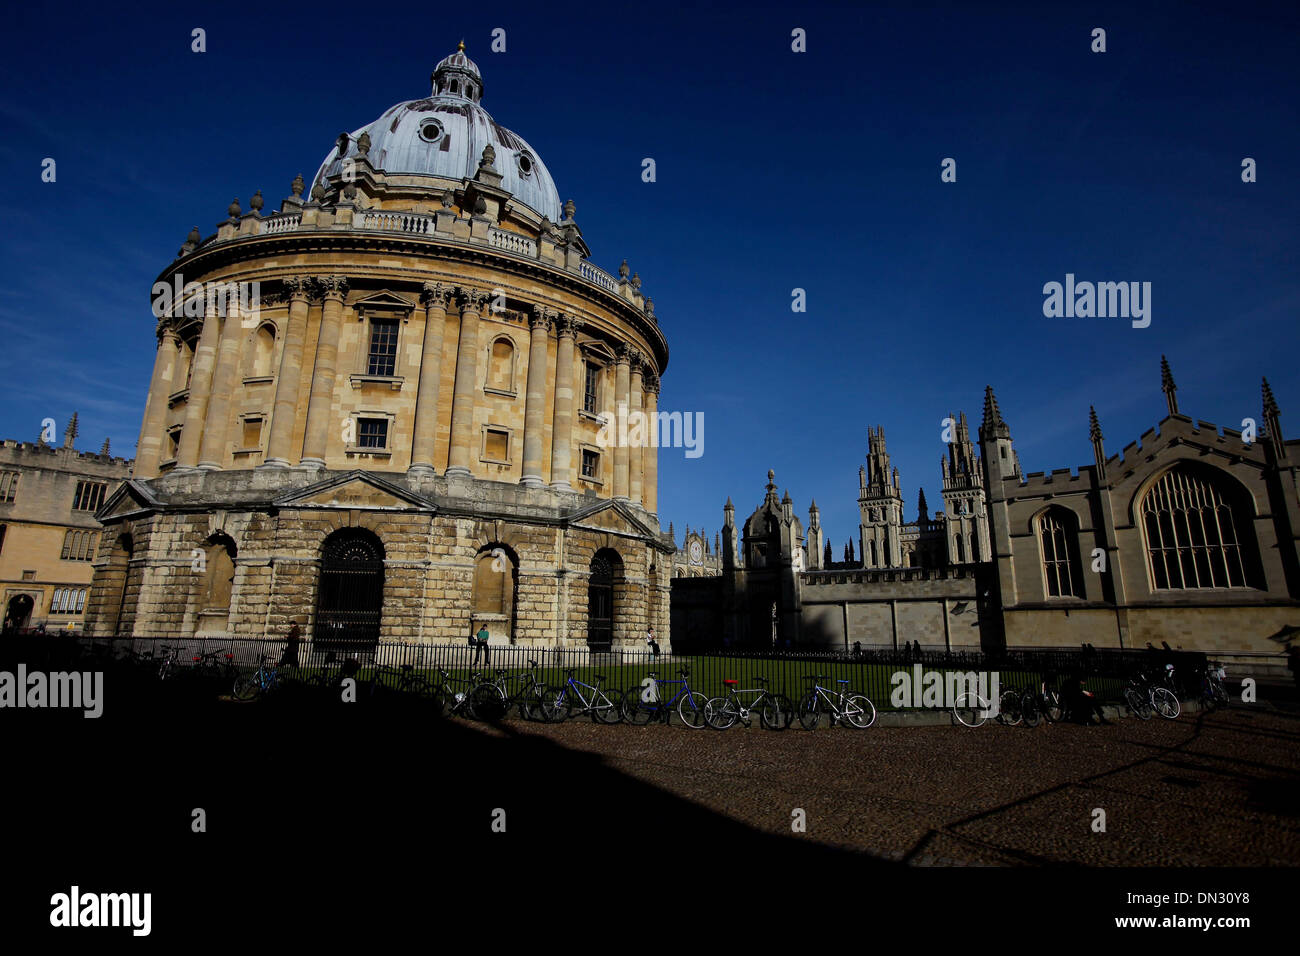 GV of the historic Oxford University building. Stock Photo